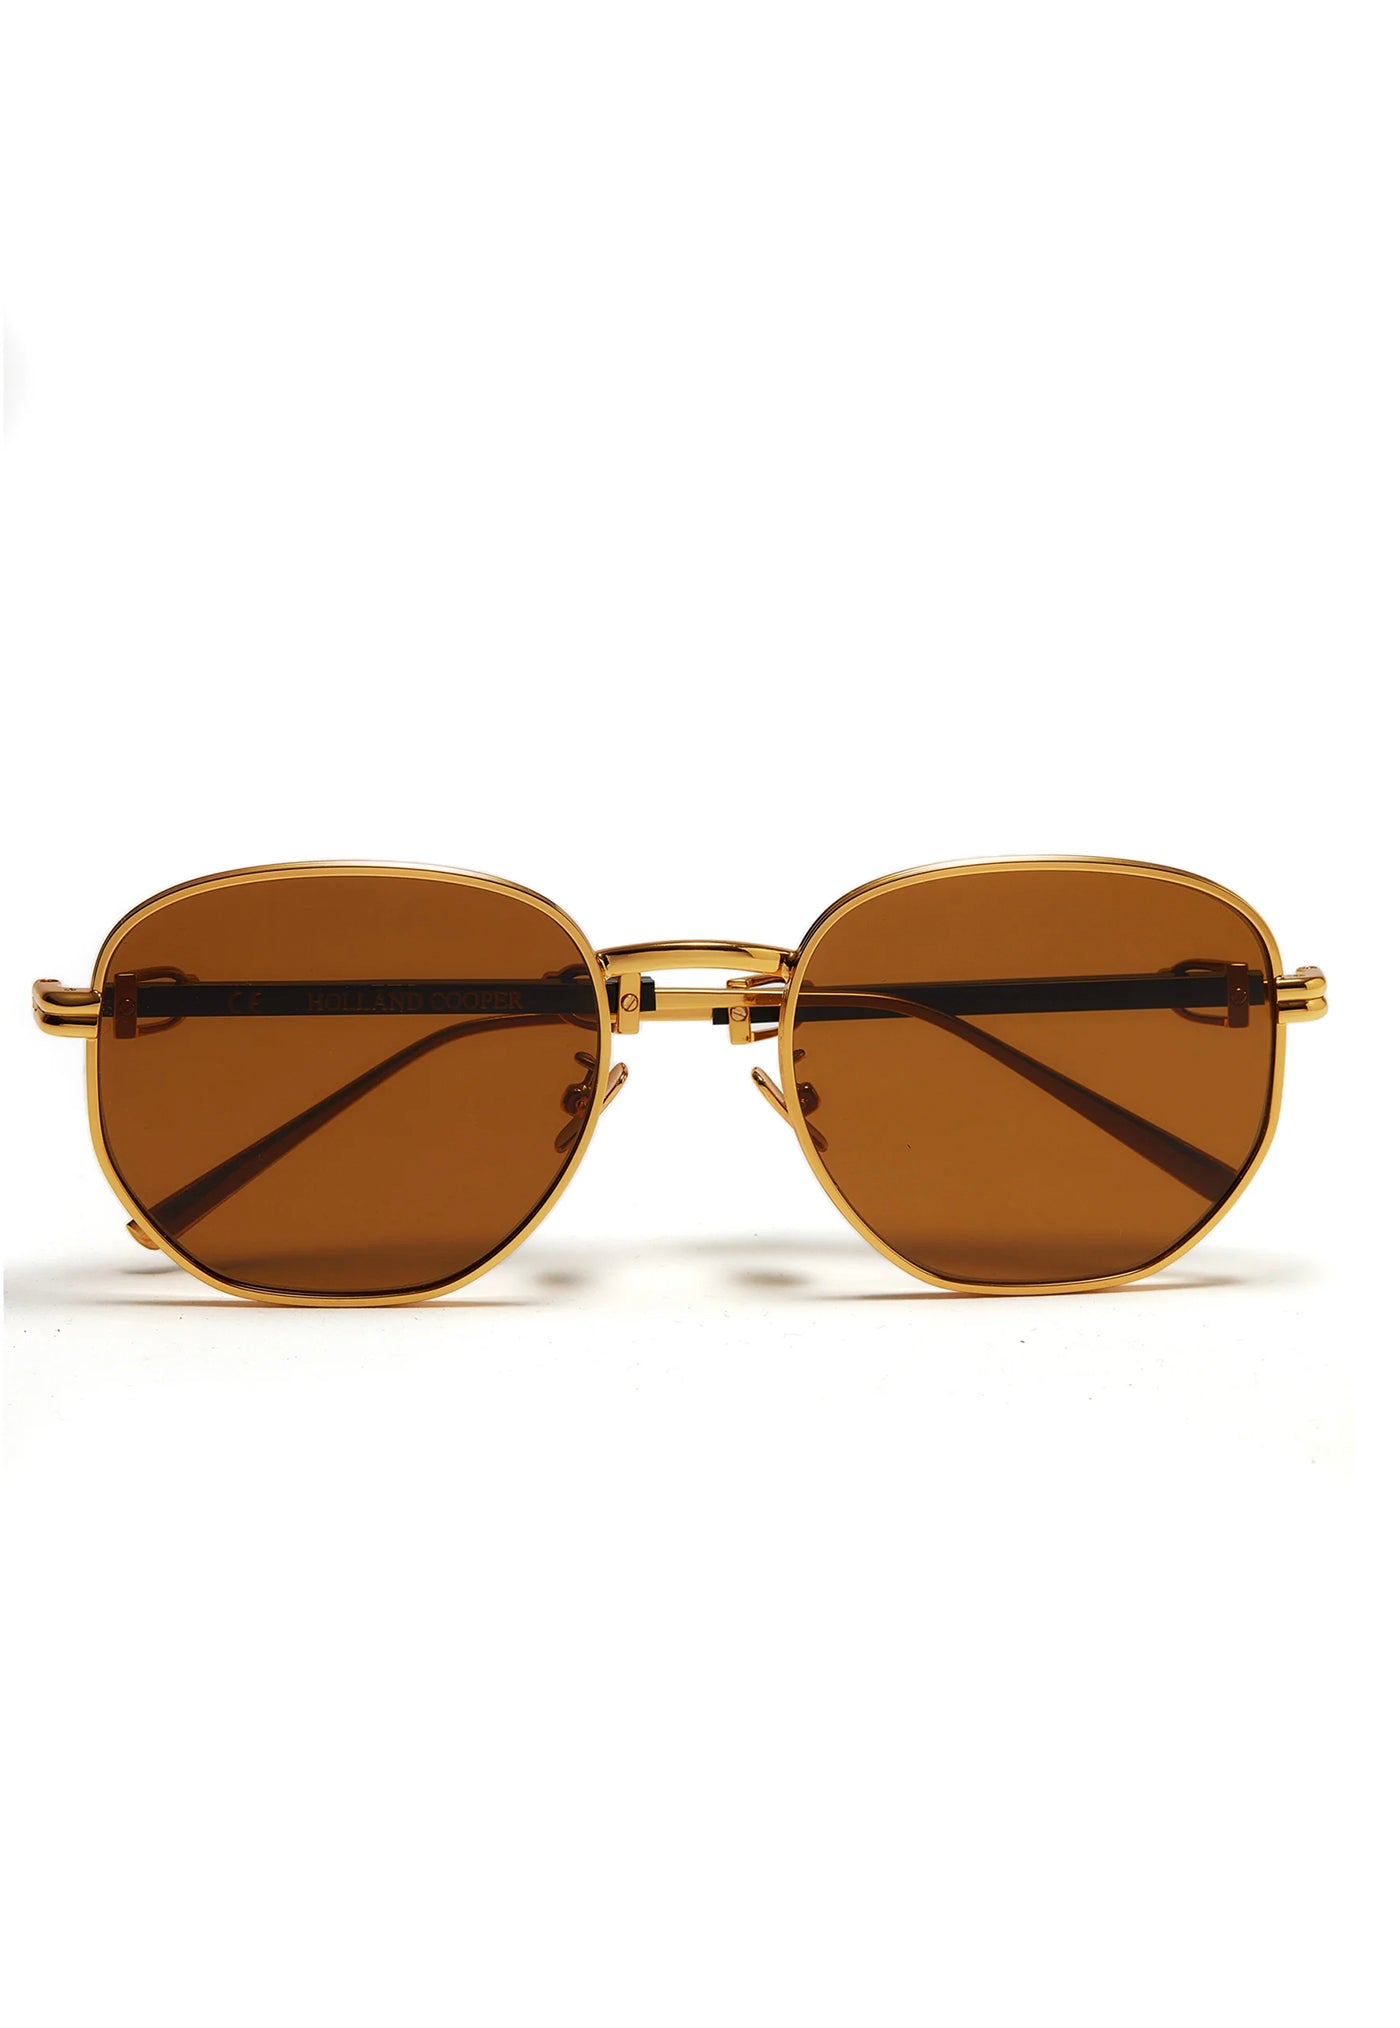 Monaco Sunglasses - Gold sold by Angel Divine